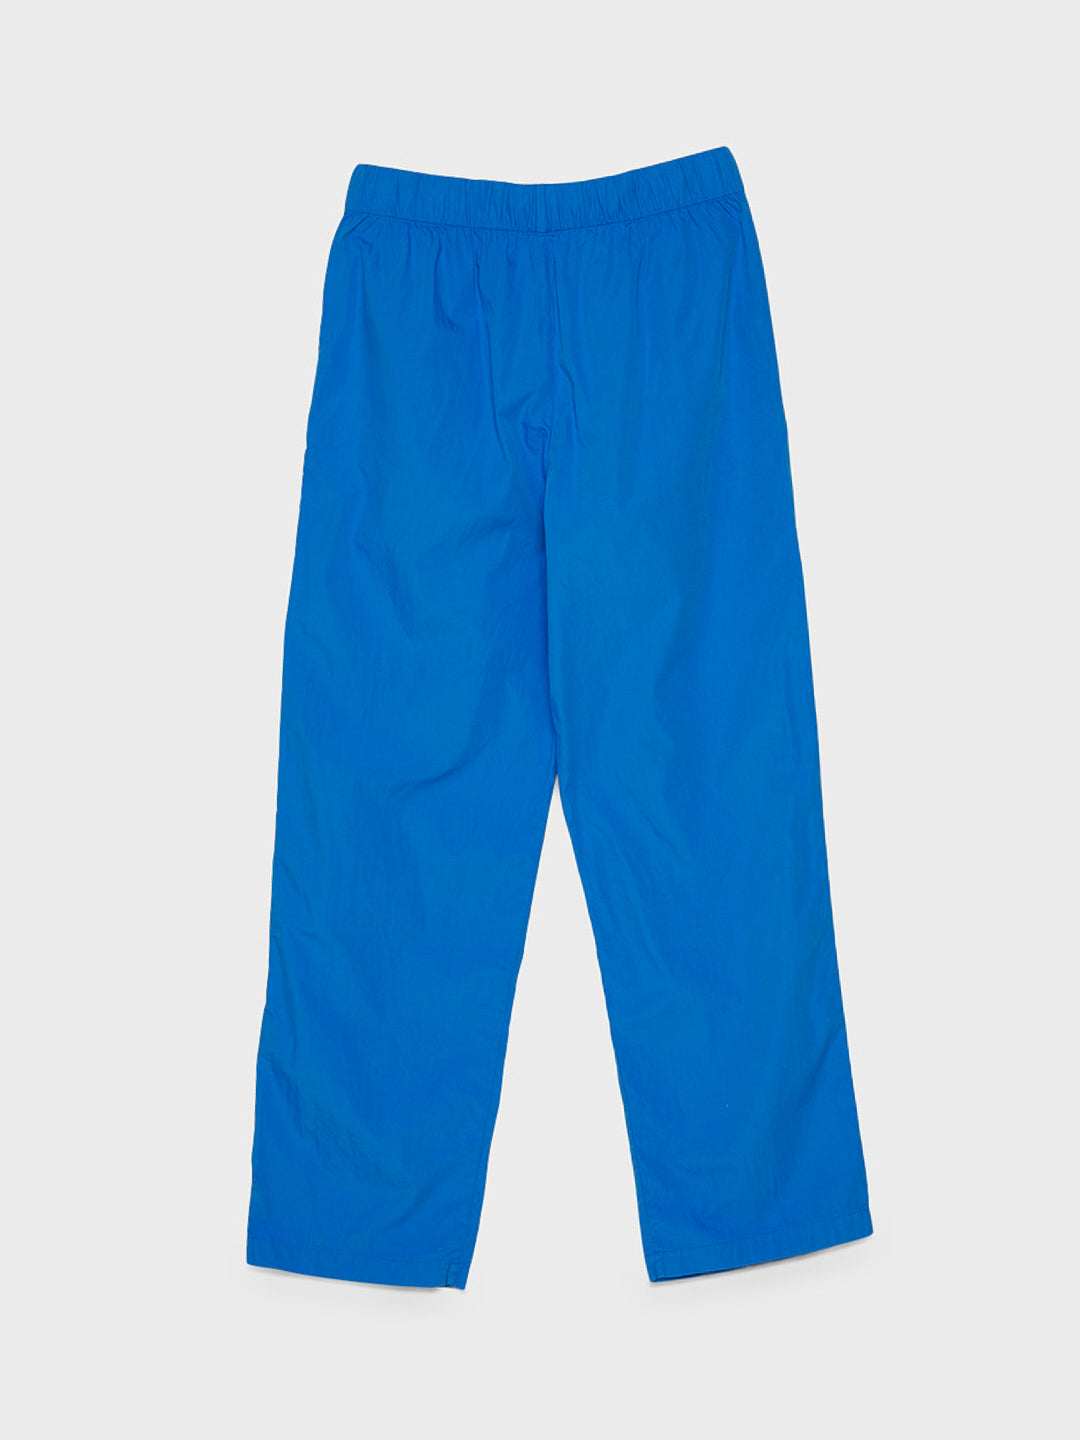 Poplin Pyjamas Pants in Royal Blue